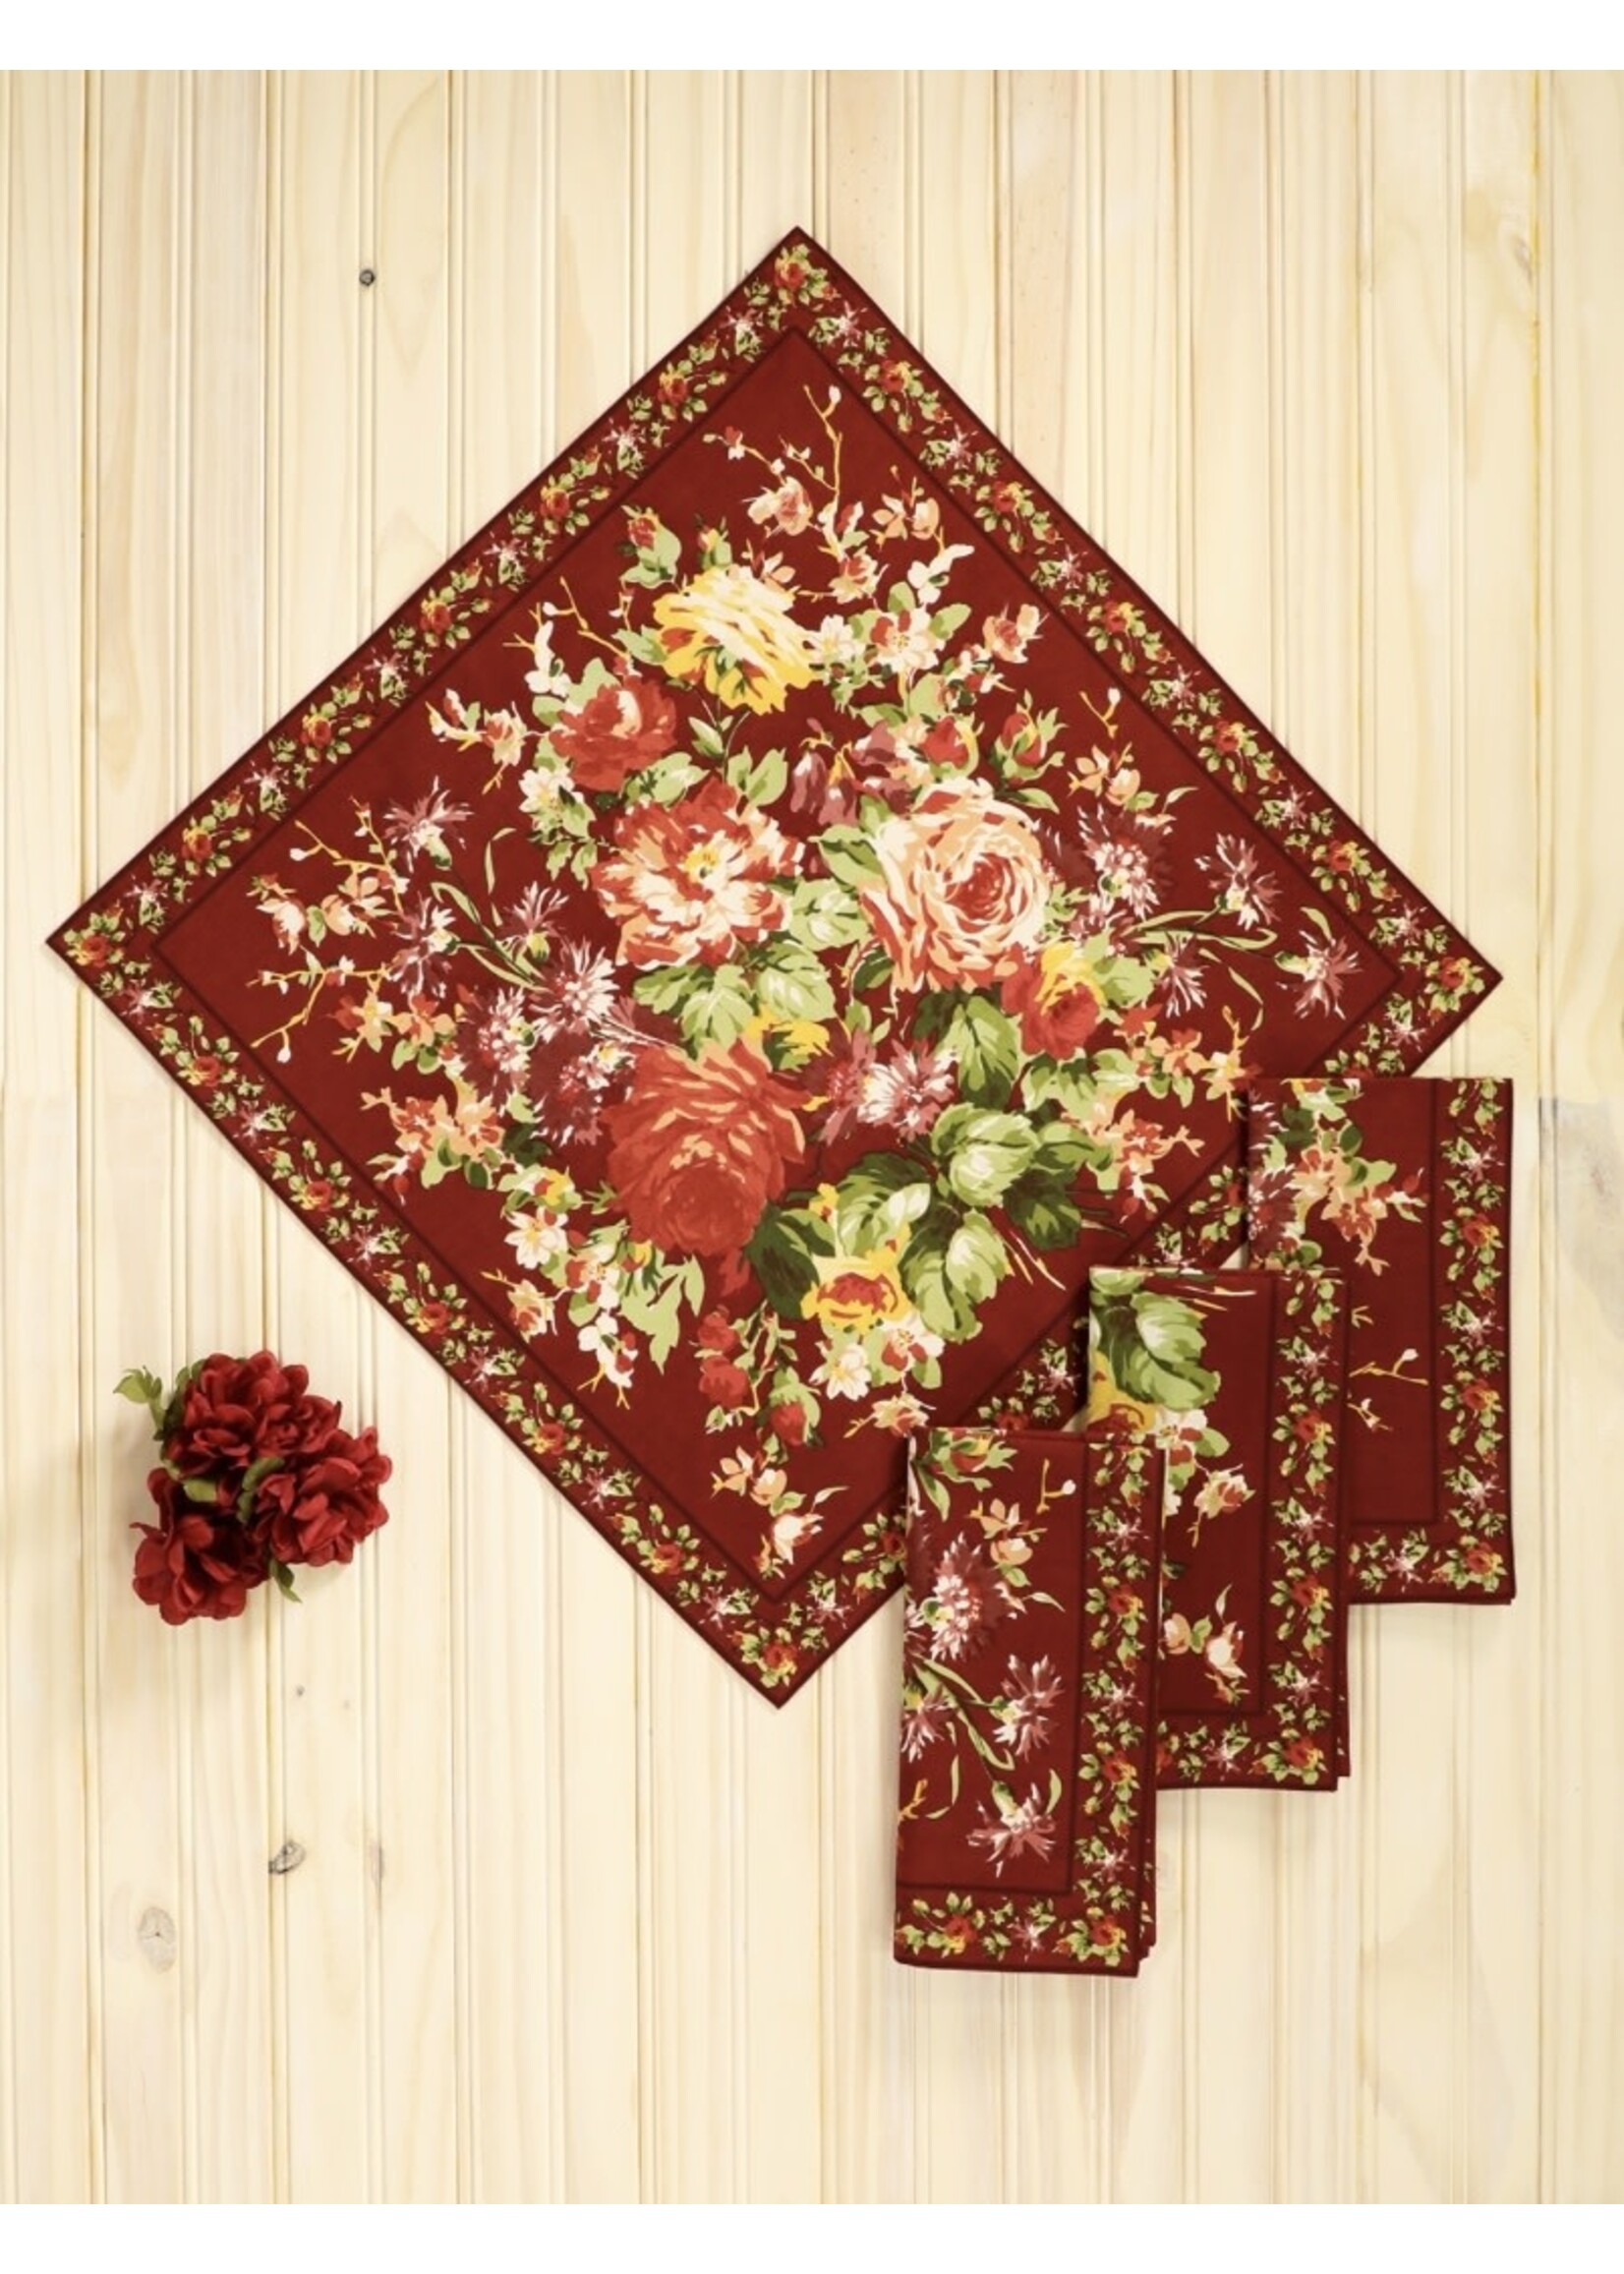 April Cornell Cottage Rose Napkin Set of 4 - Autumn